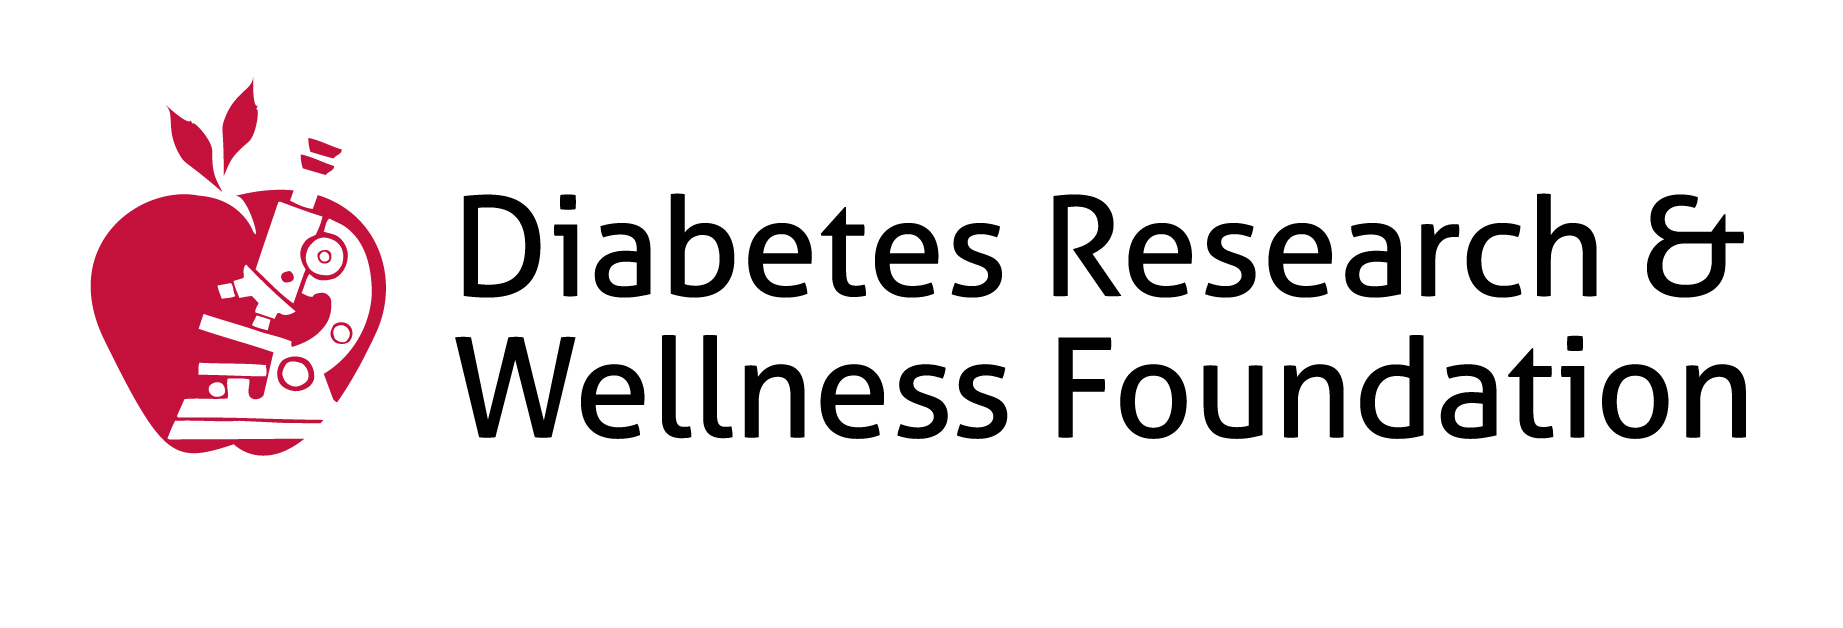 Diabetes Research & Wellness Foundation Logo